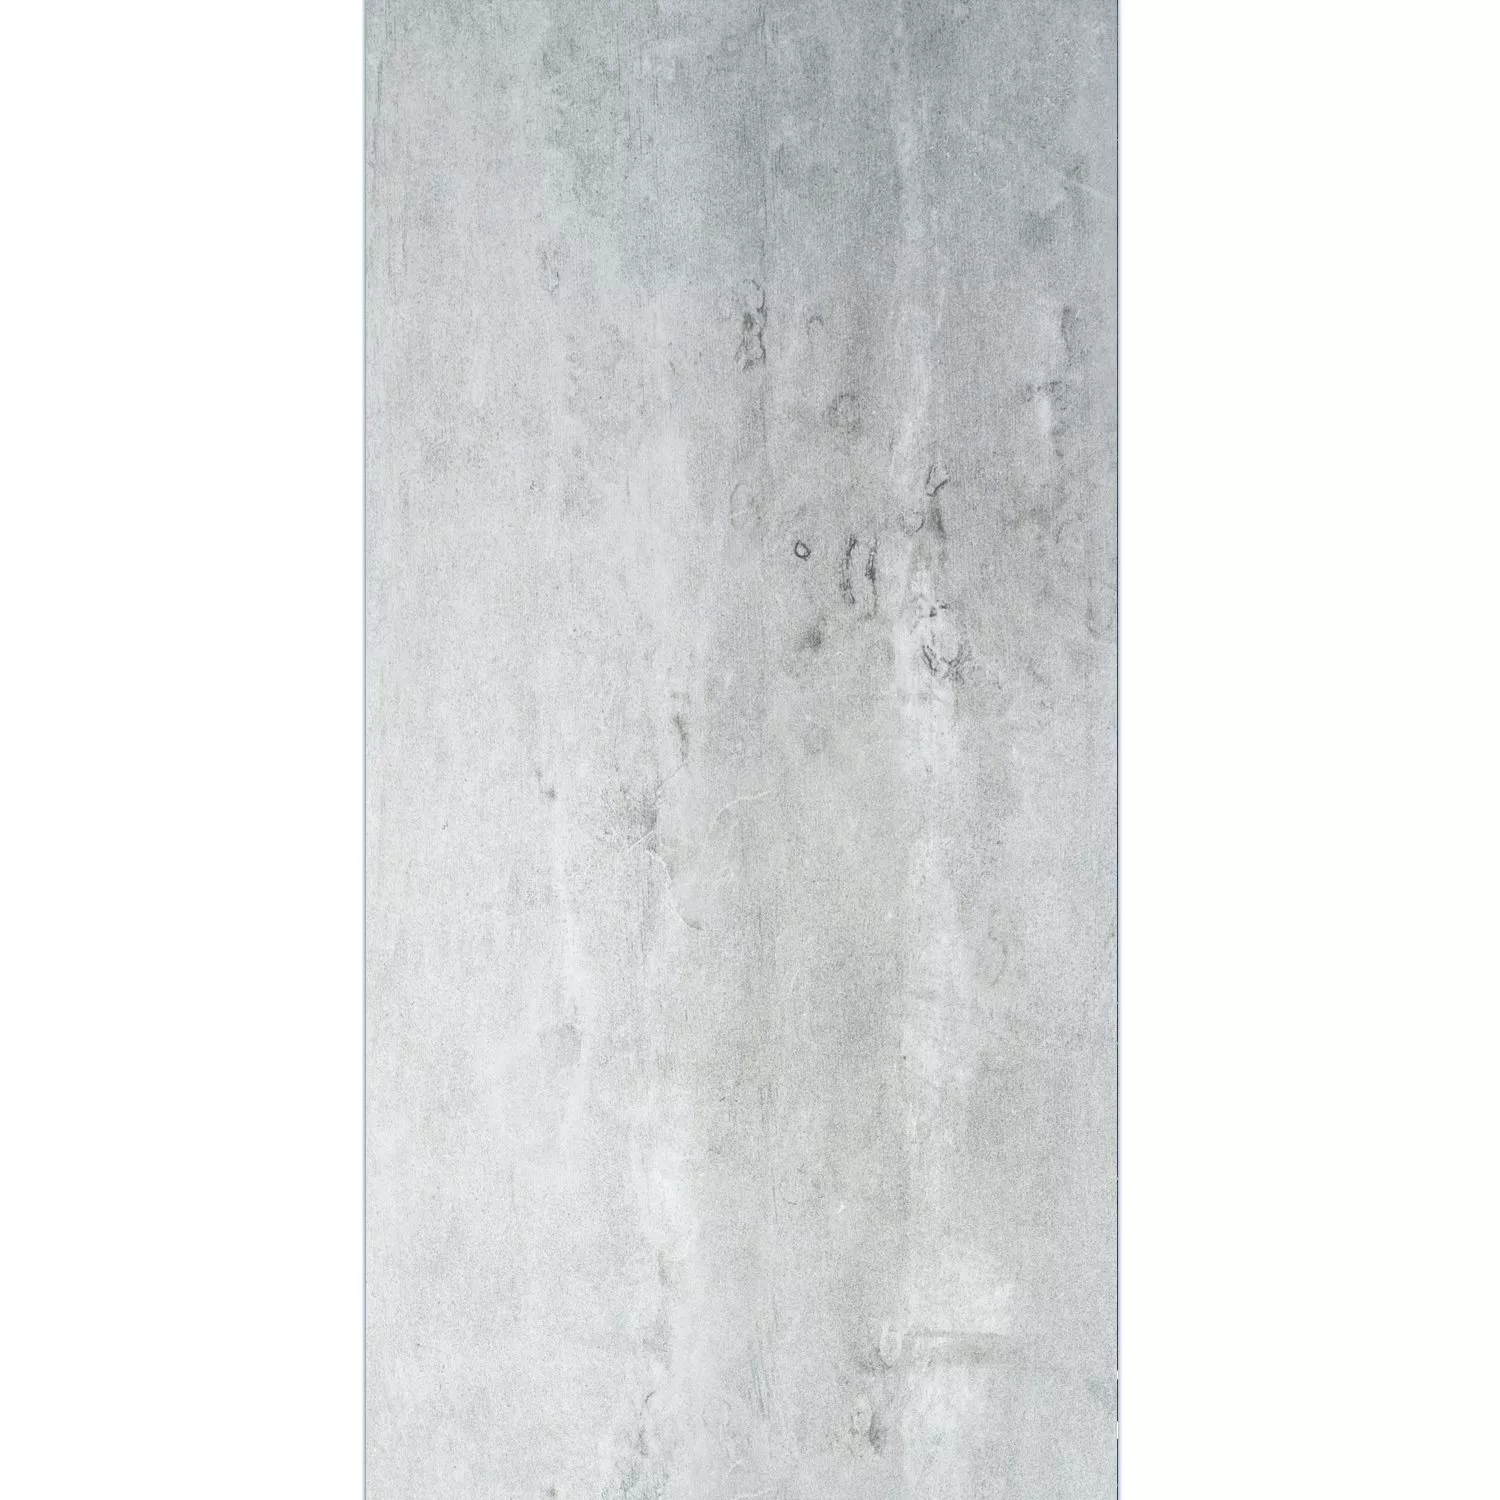 Vzorek Podlahové Dlaždice Cementový Vzhled Juventas Světle Šedá 60x120cm